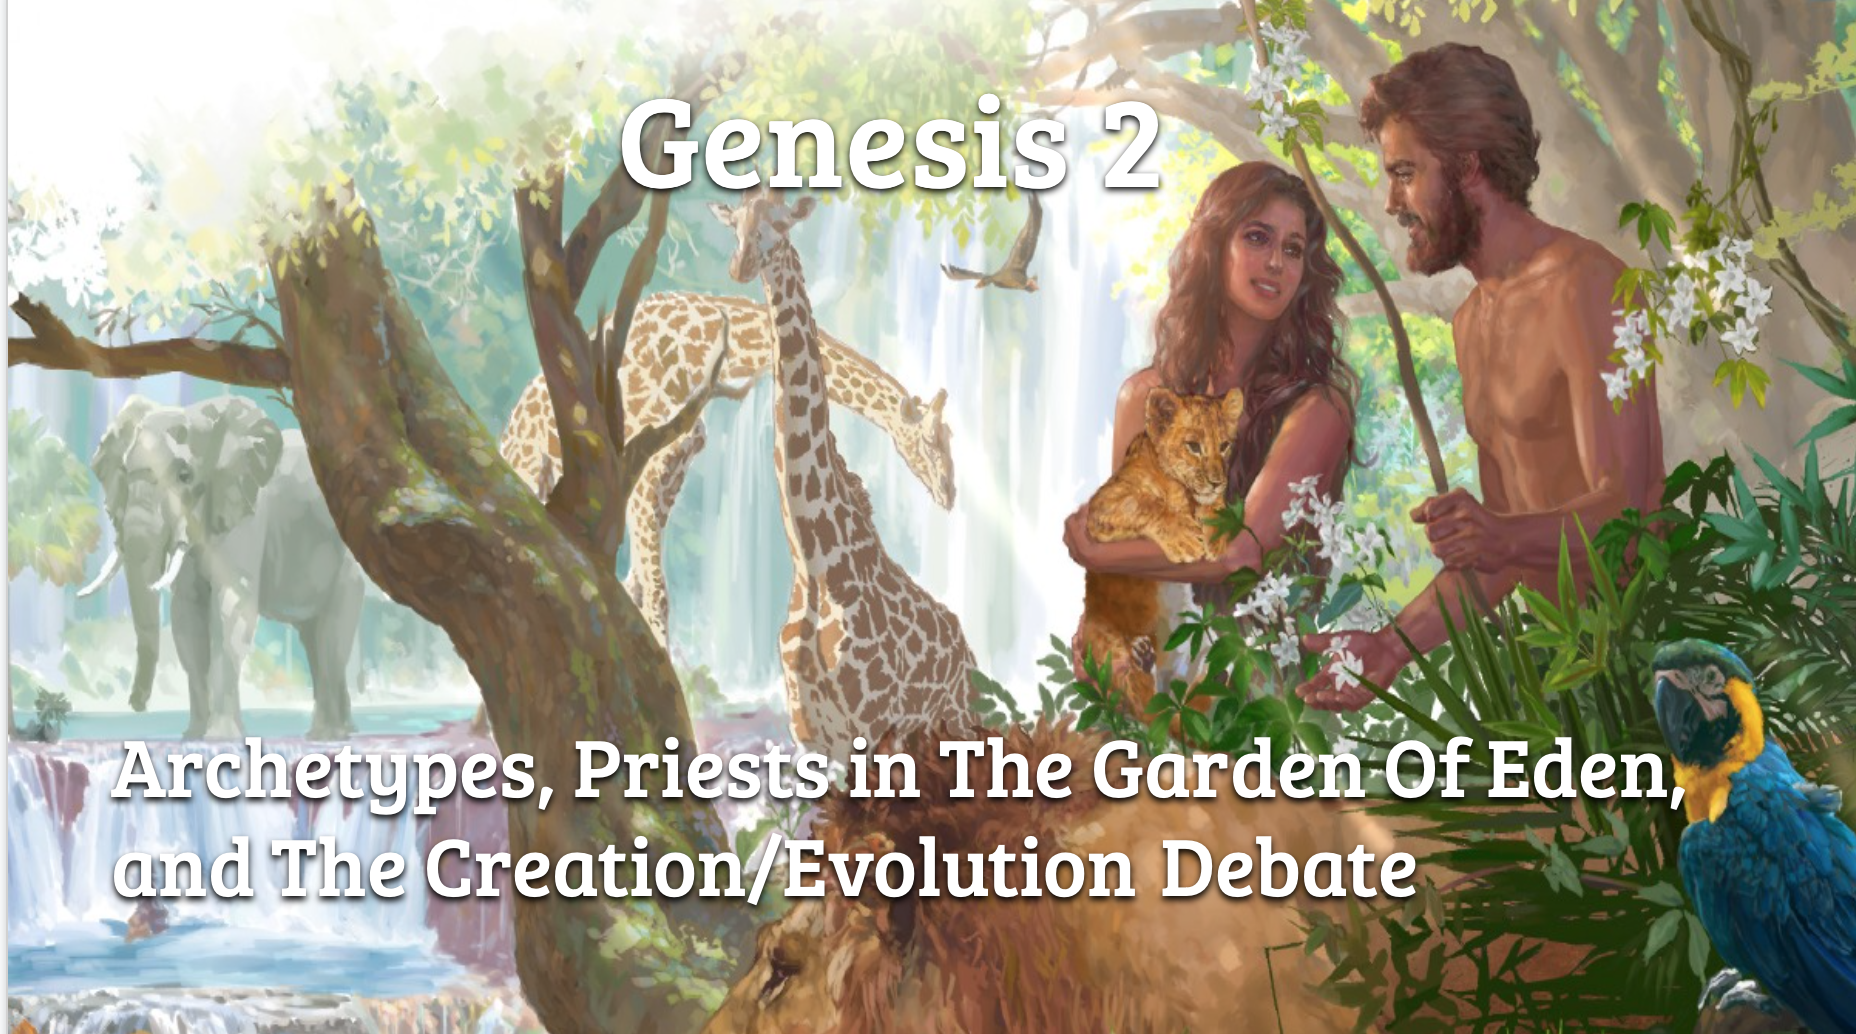 Genesis 2 - Archetypes, Priests In The Garden Of Eden, and The Creation/Evolution Debate